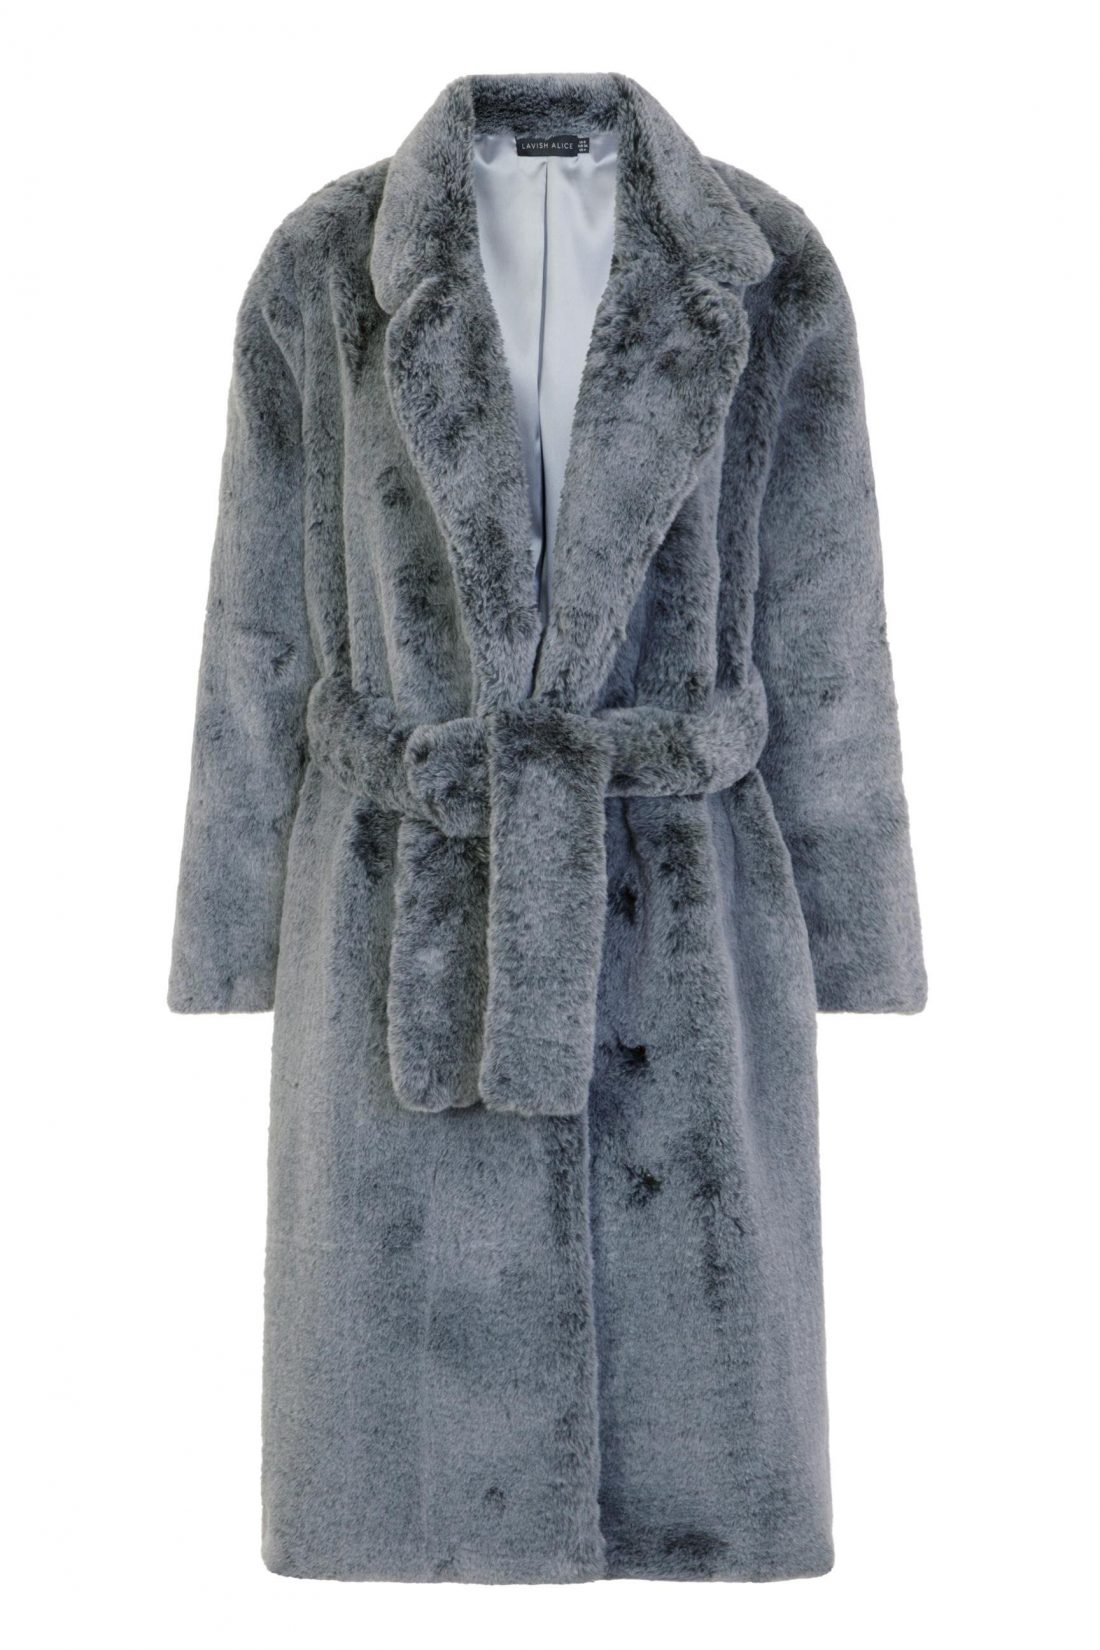 fashion,faux fur coats,winter coat